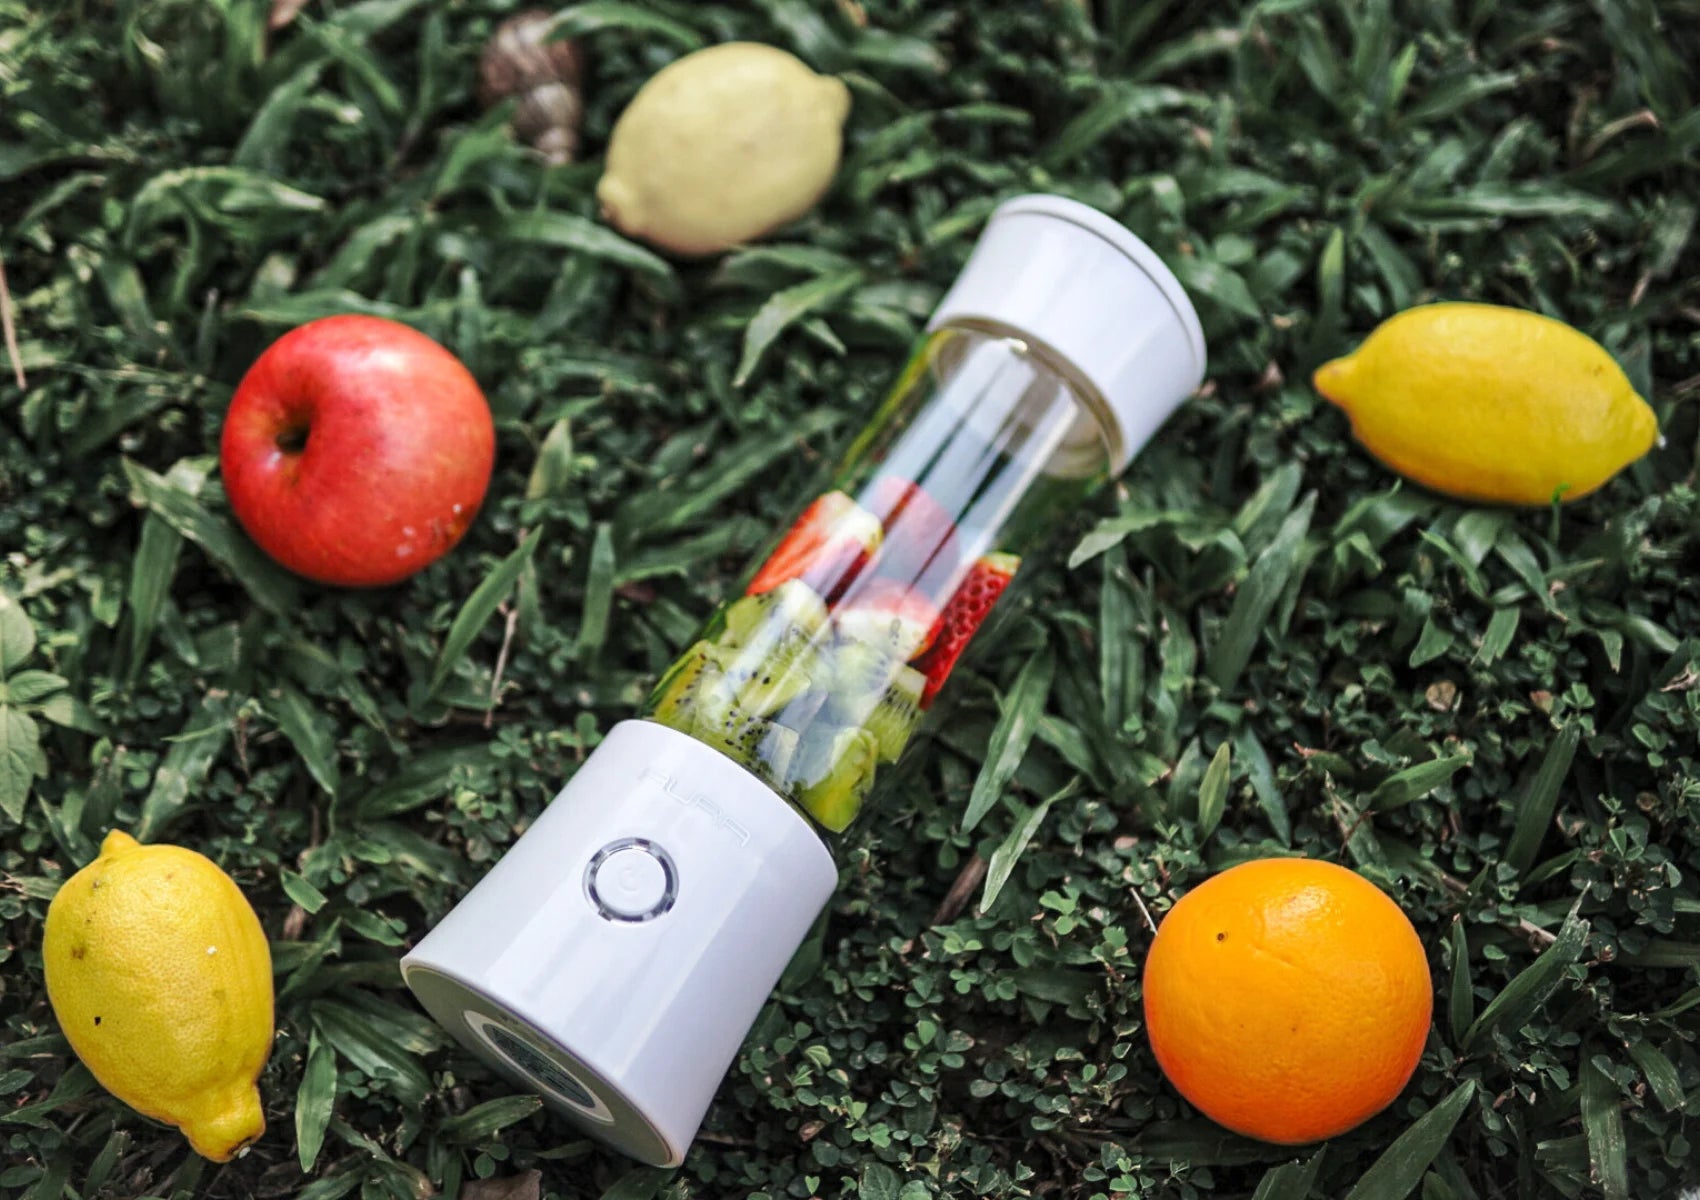 aura portable blender with various fruit like lemon, oranges, and apple on grass